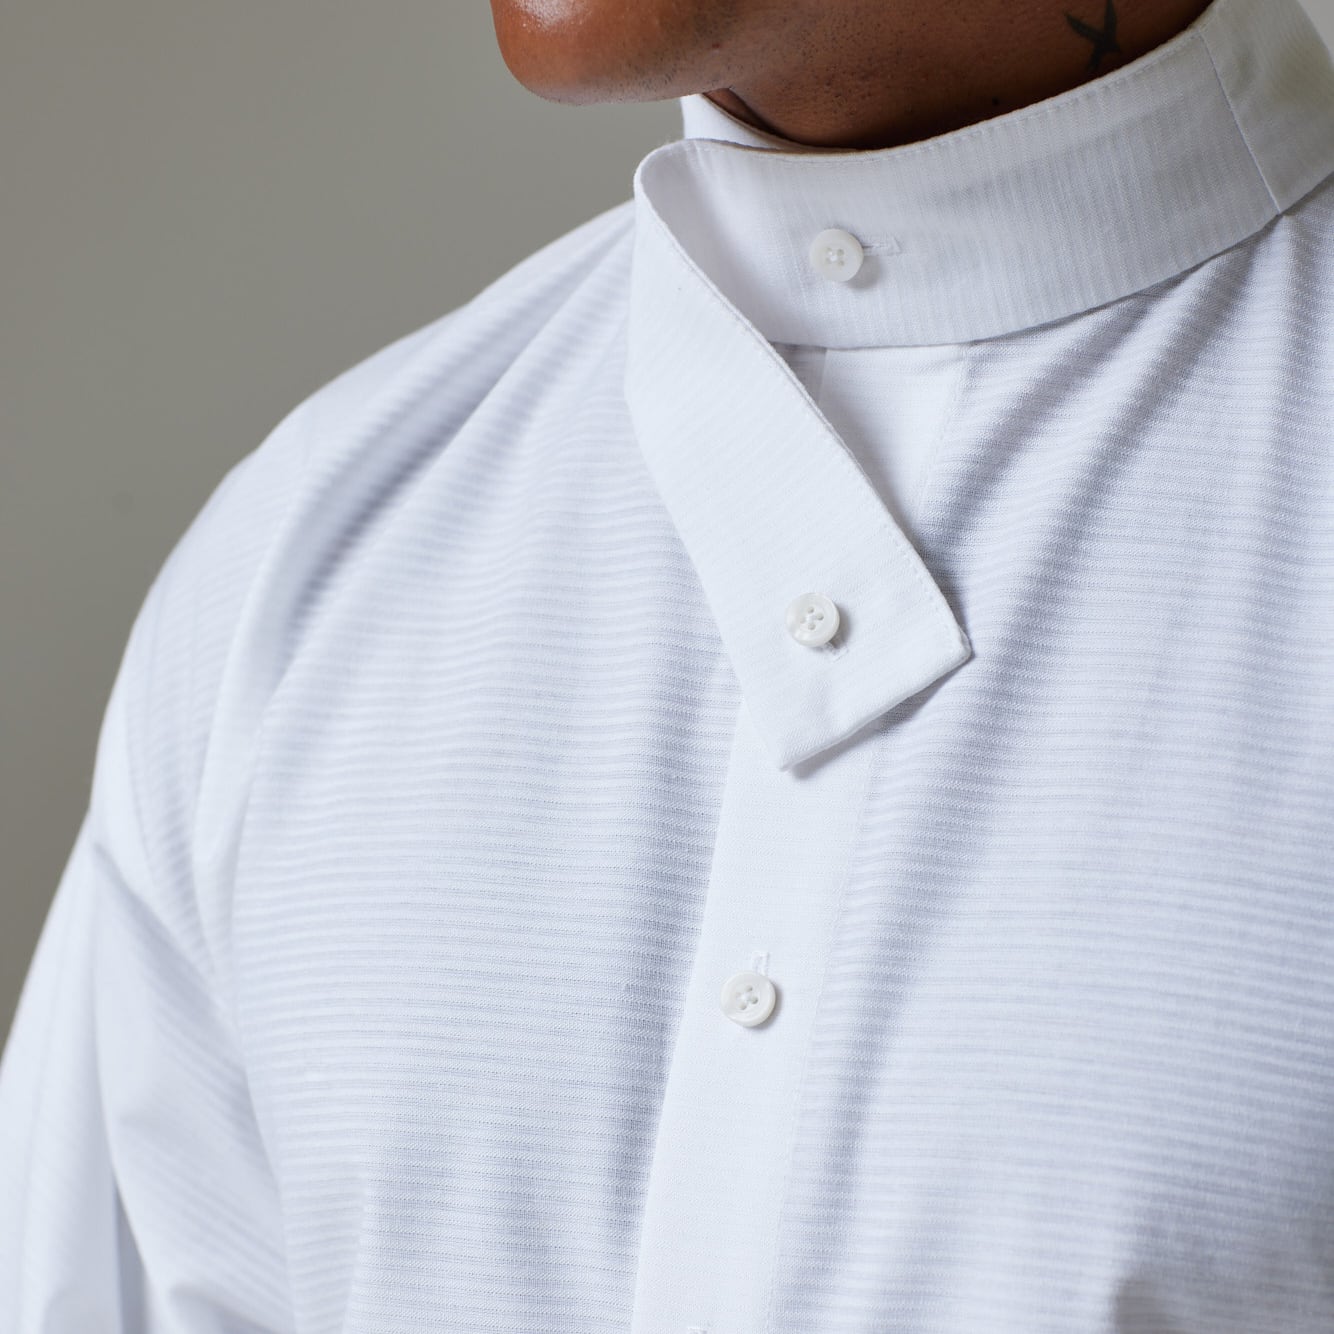 ZERØ London - Detail view, mens luxury white dress shirt, zero waste fashion, designed & made in London